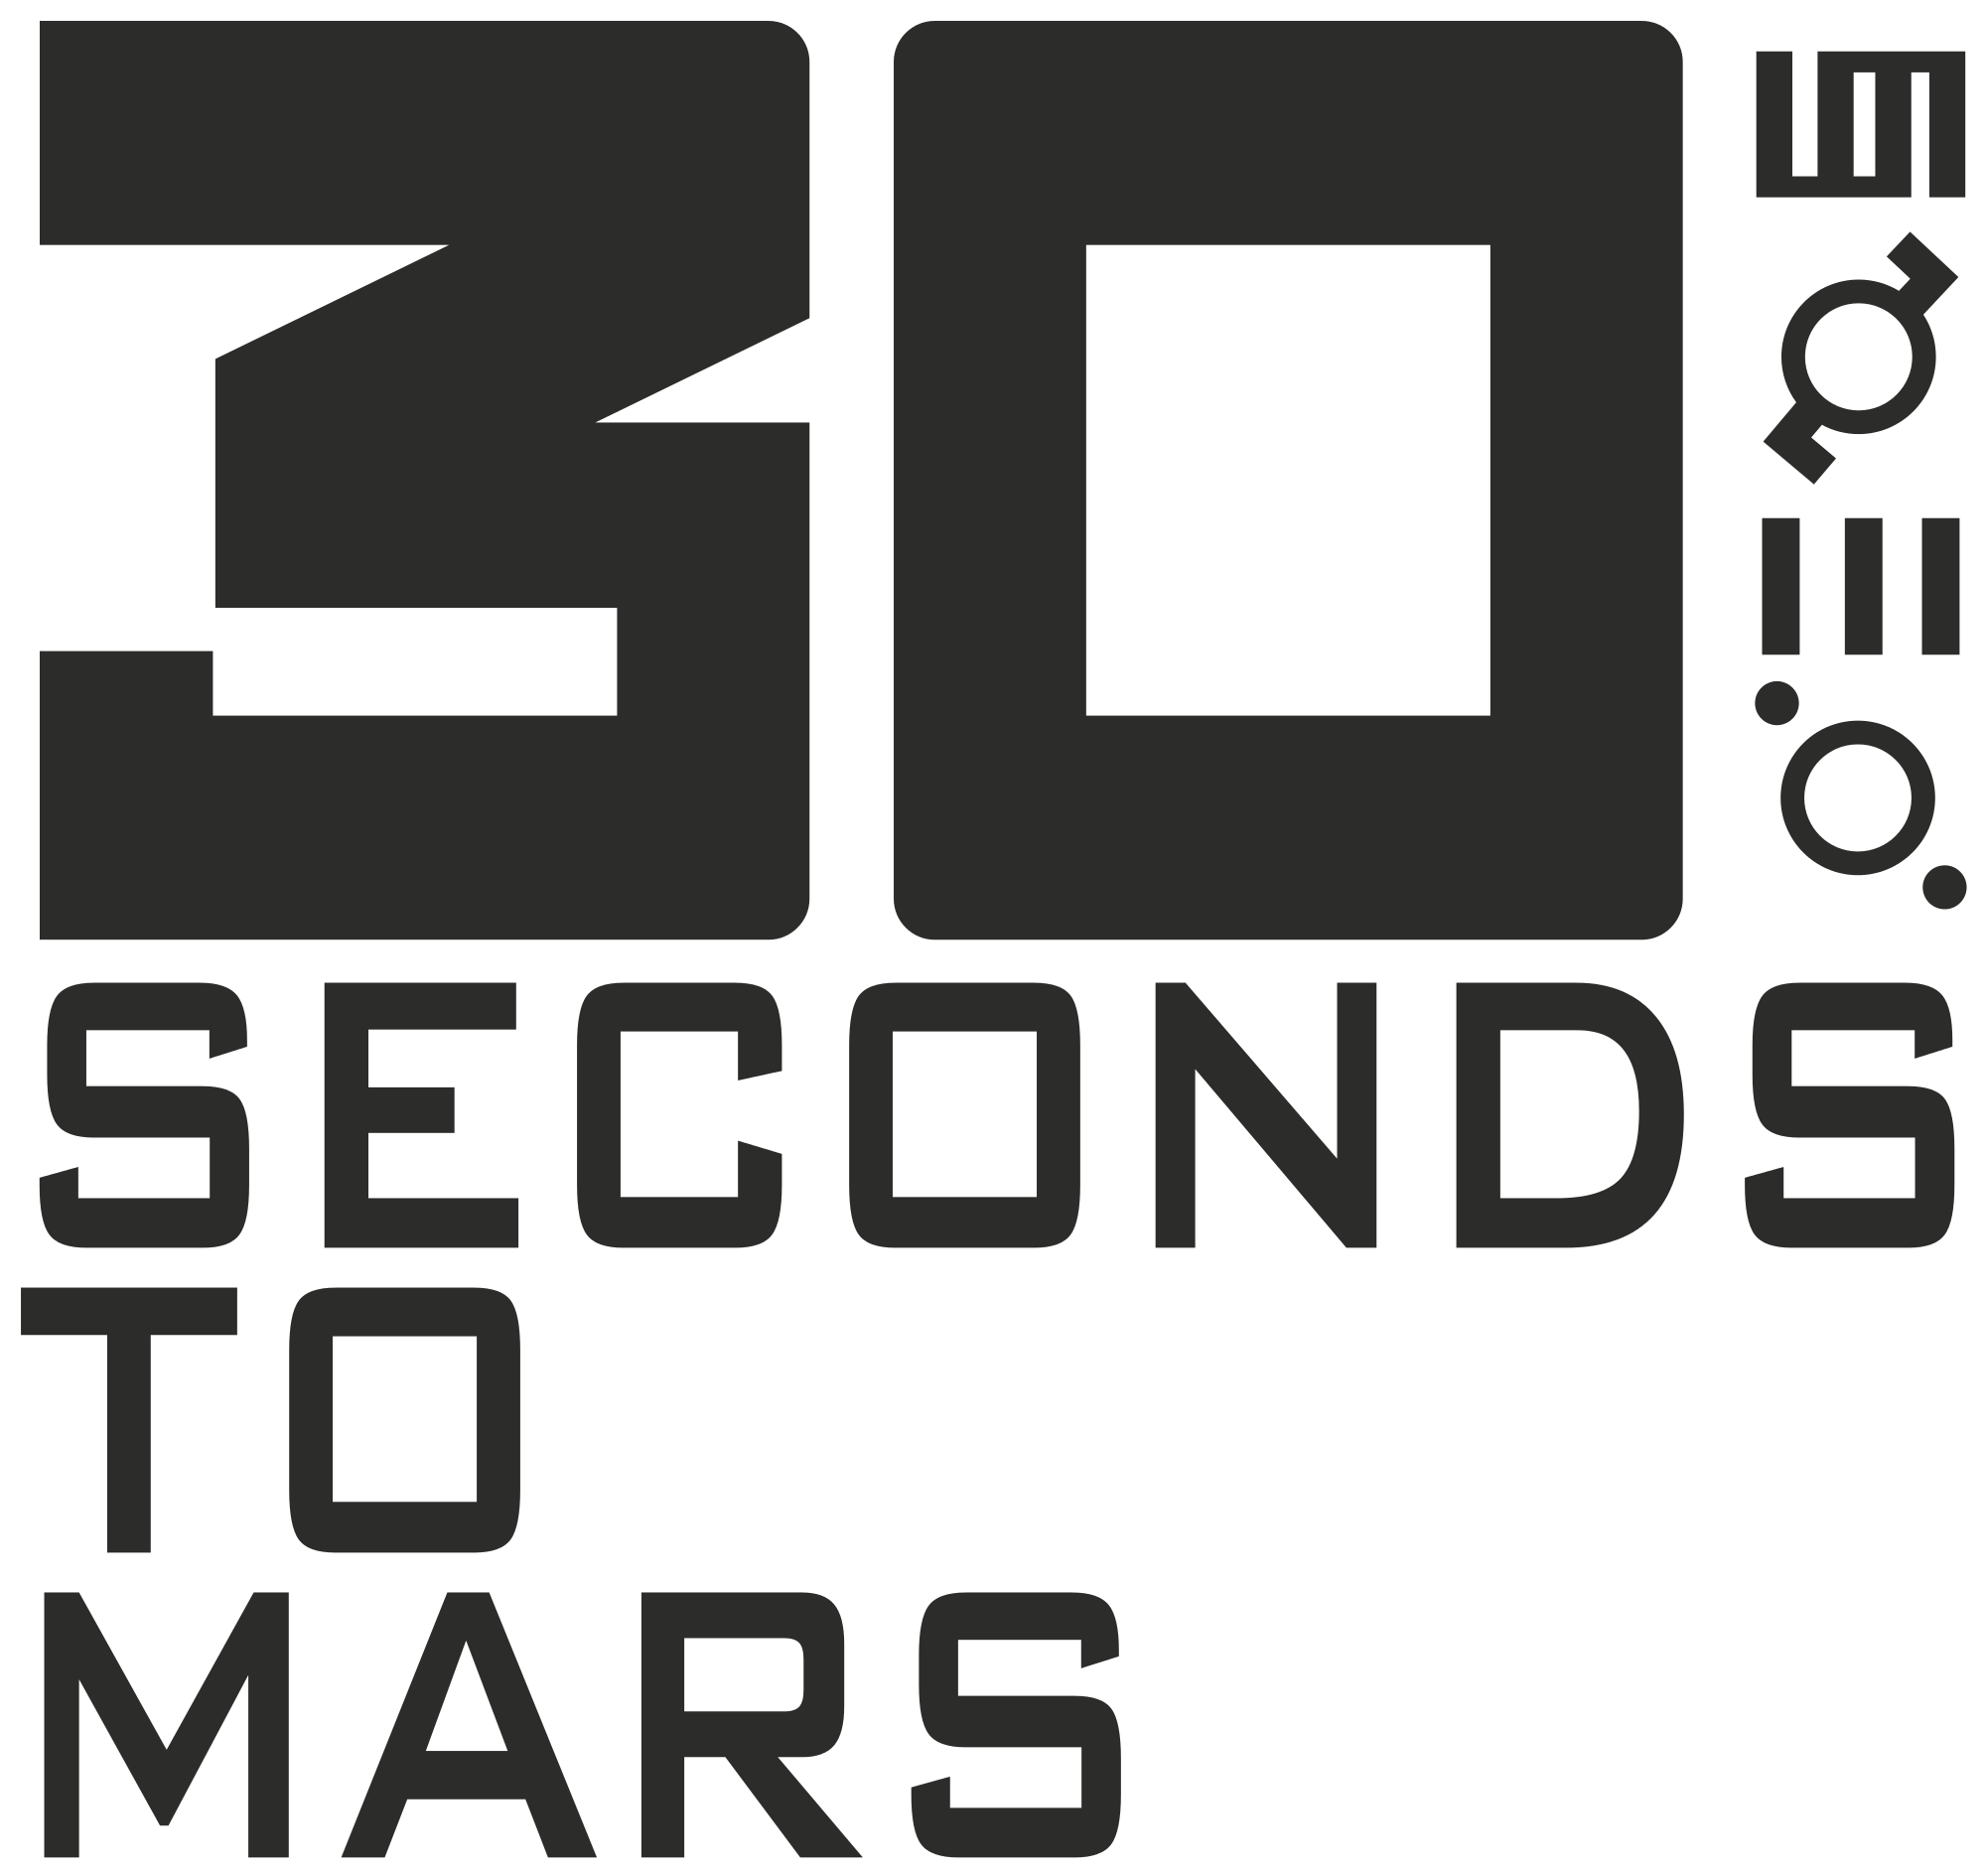 30 Seconds to Mars Logo - File:30secondstomars-logo.svg - Wikimedia Commons